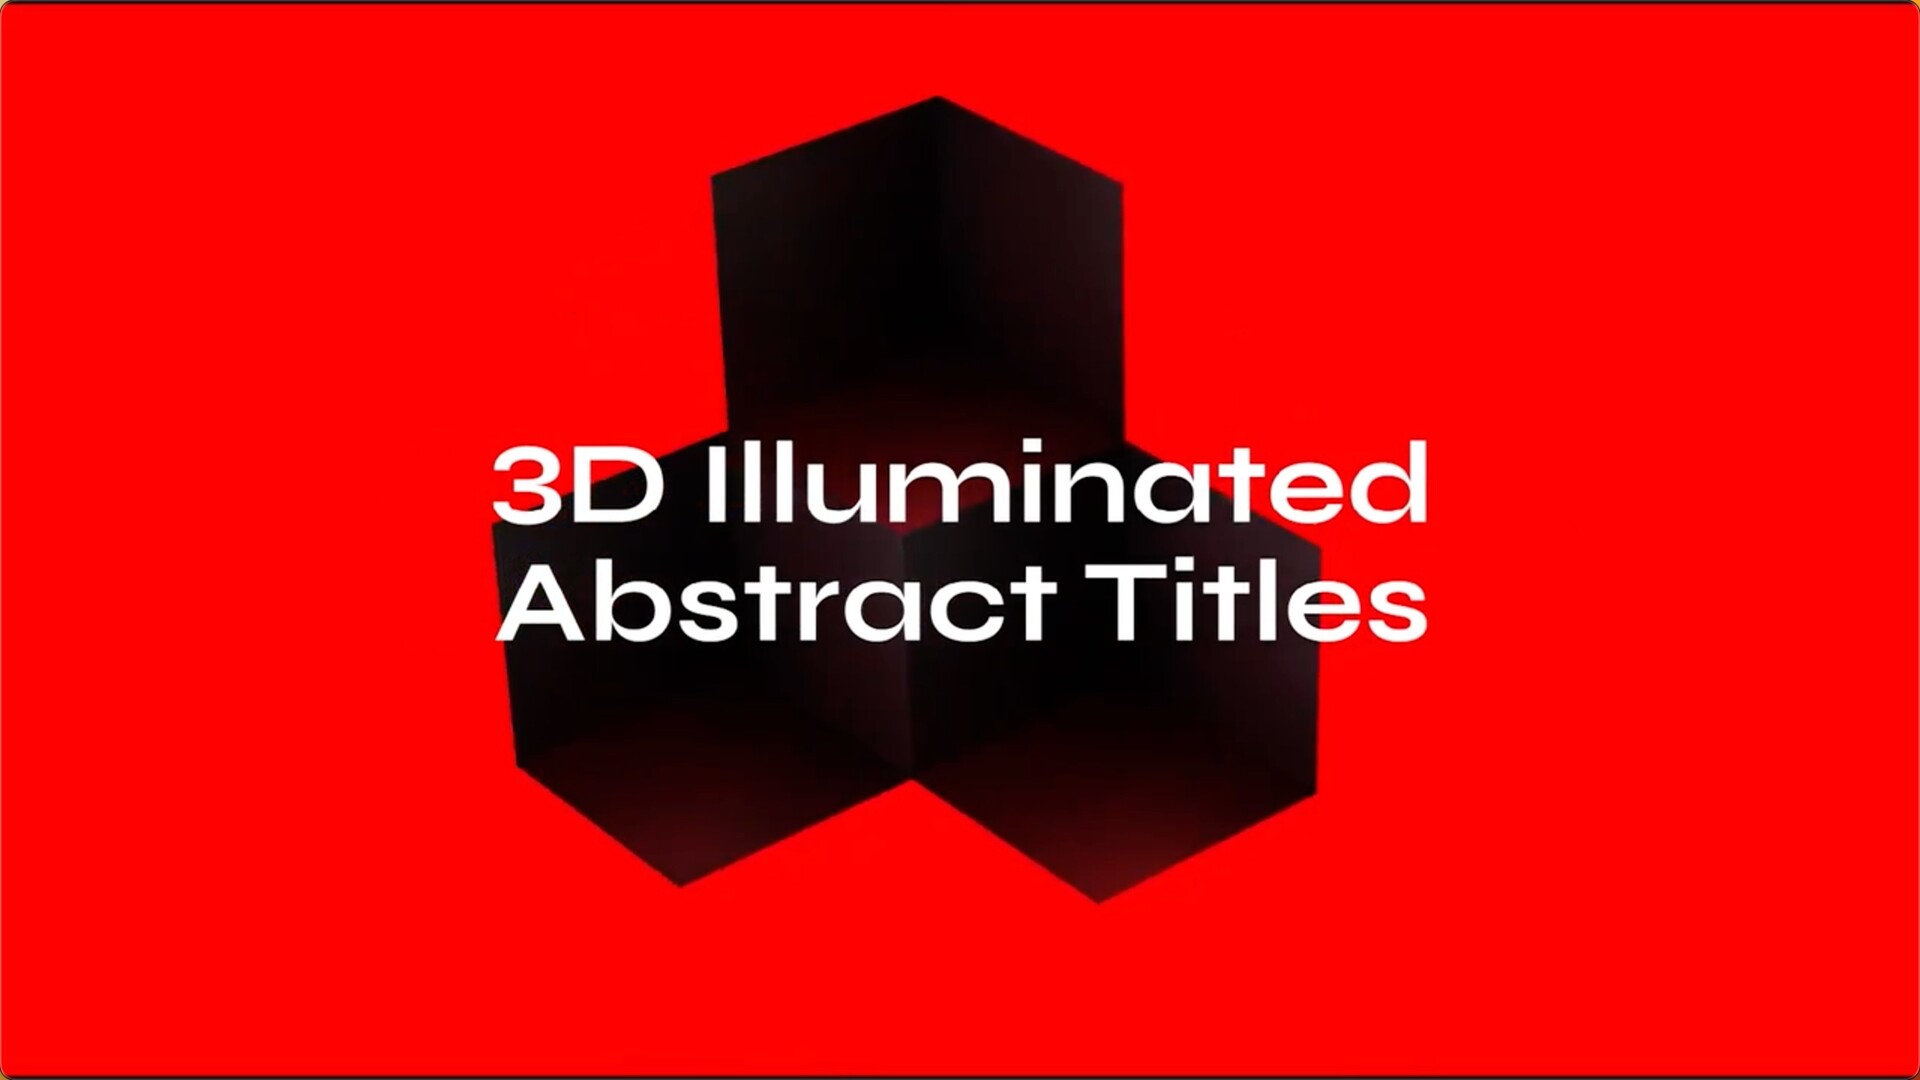 fcpx发生器3D Illuminated Abstract Titles(3D照明抽象标题)